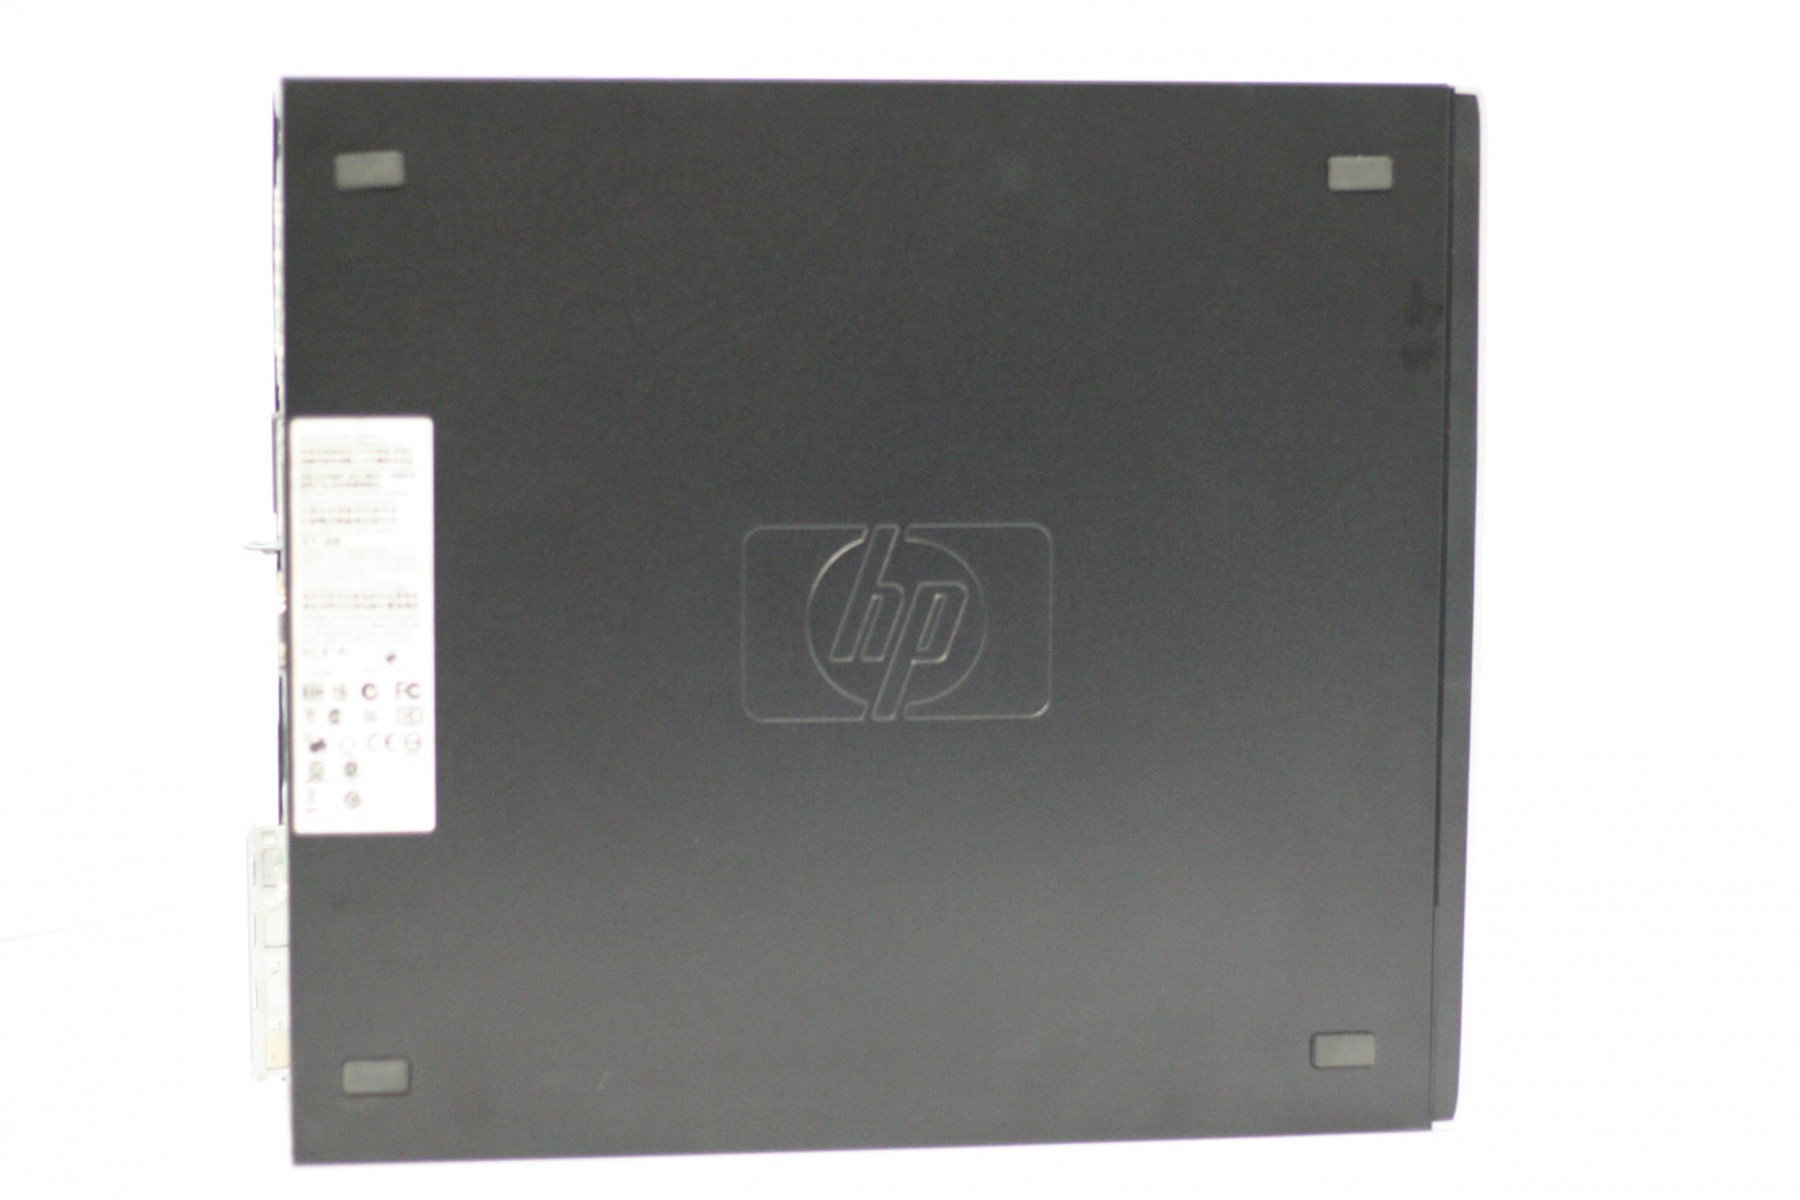 CDH5206-HP Compaq 8000 Elite SFF Small Form Factor 3.0GHz Desktop PC-image